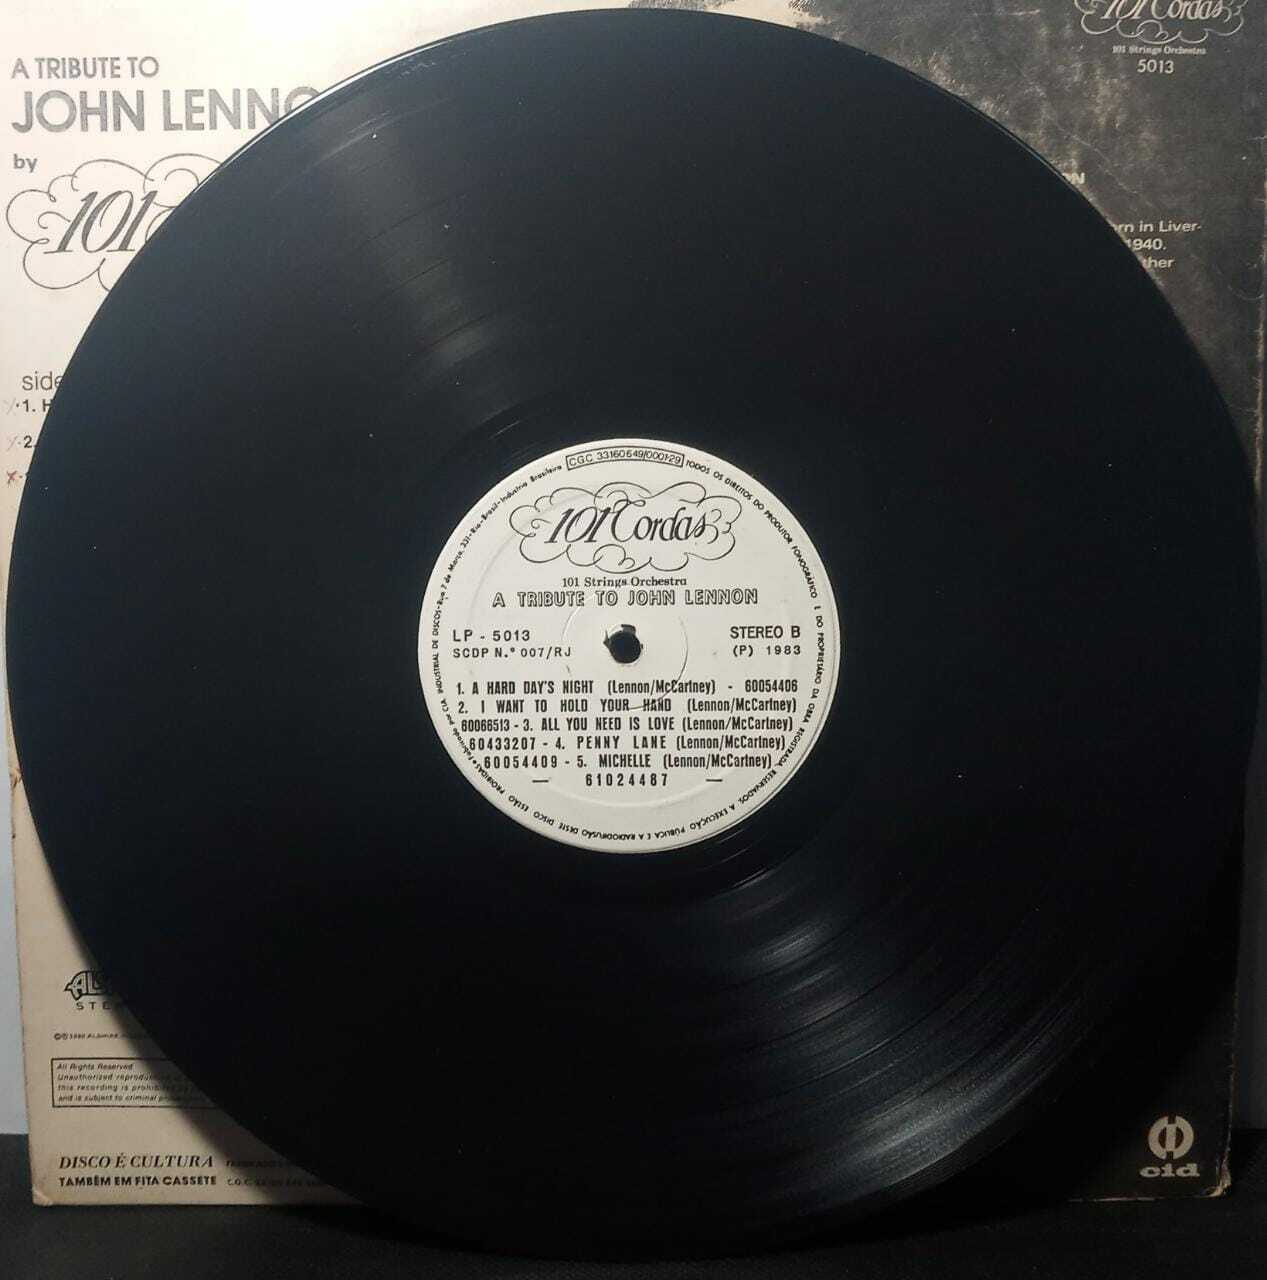 VINIL - John Lennon - A Tribute by 101 Strings Orchestra